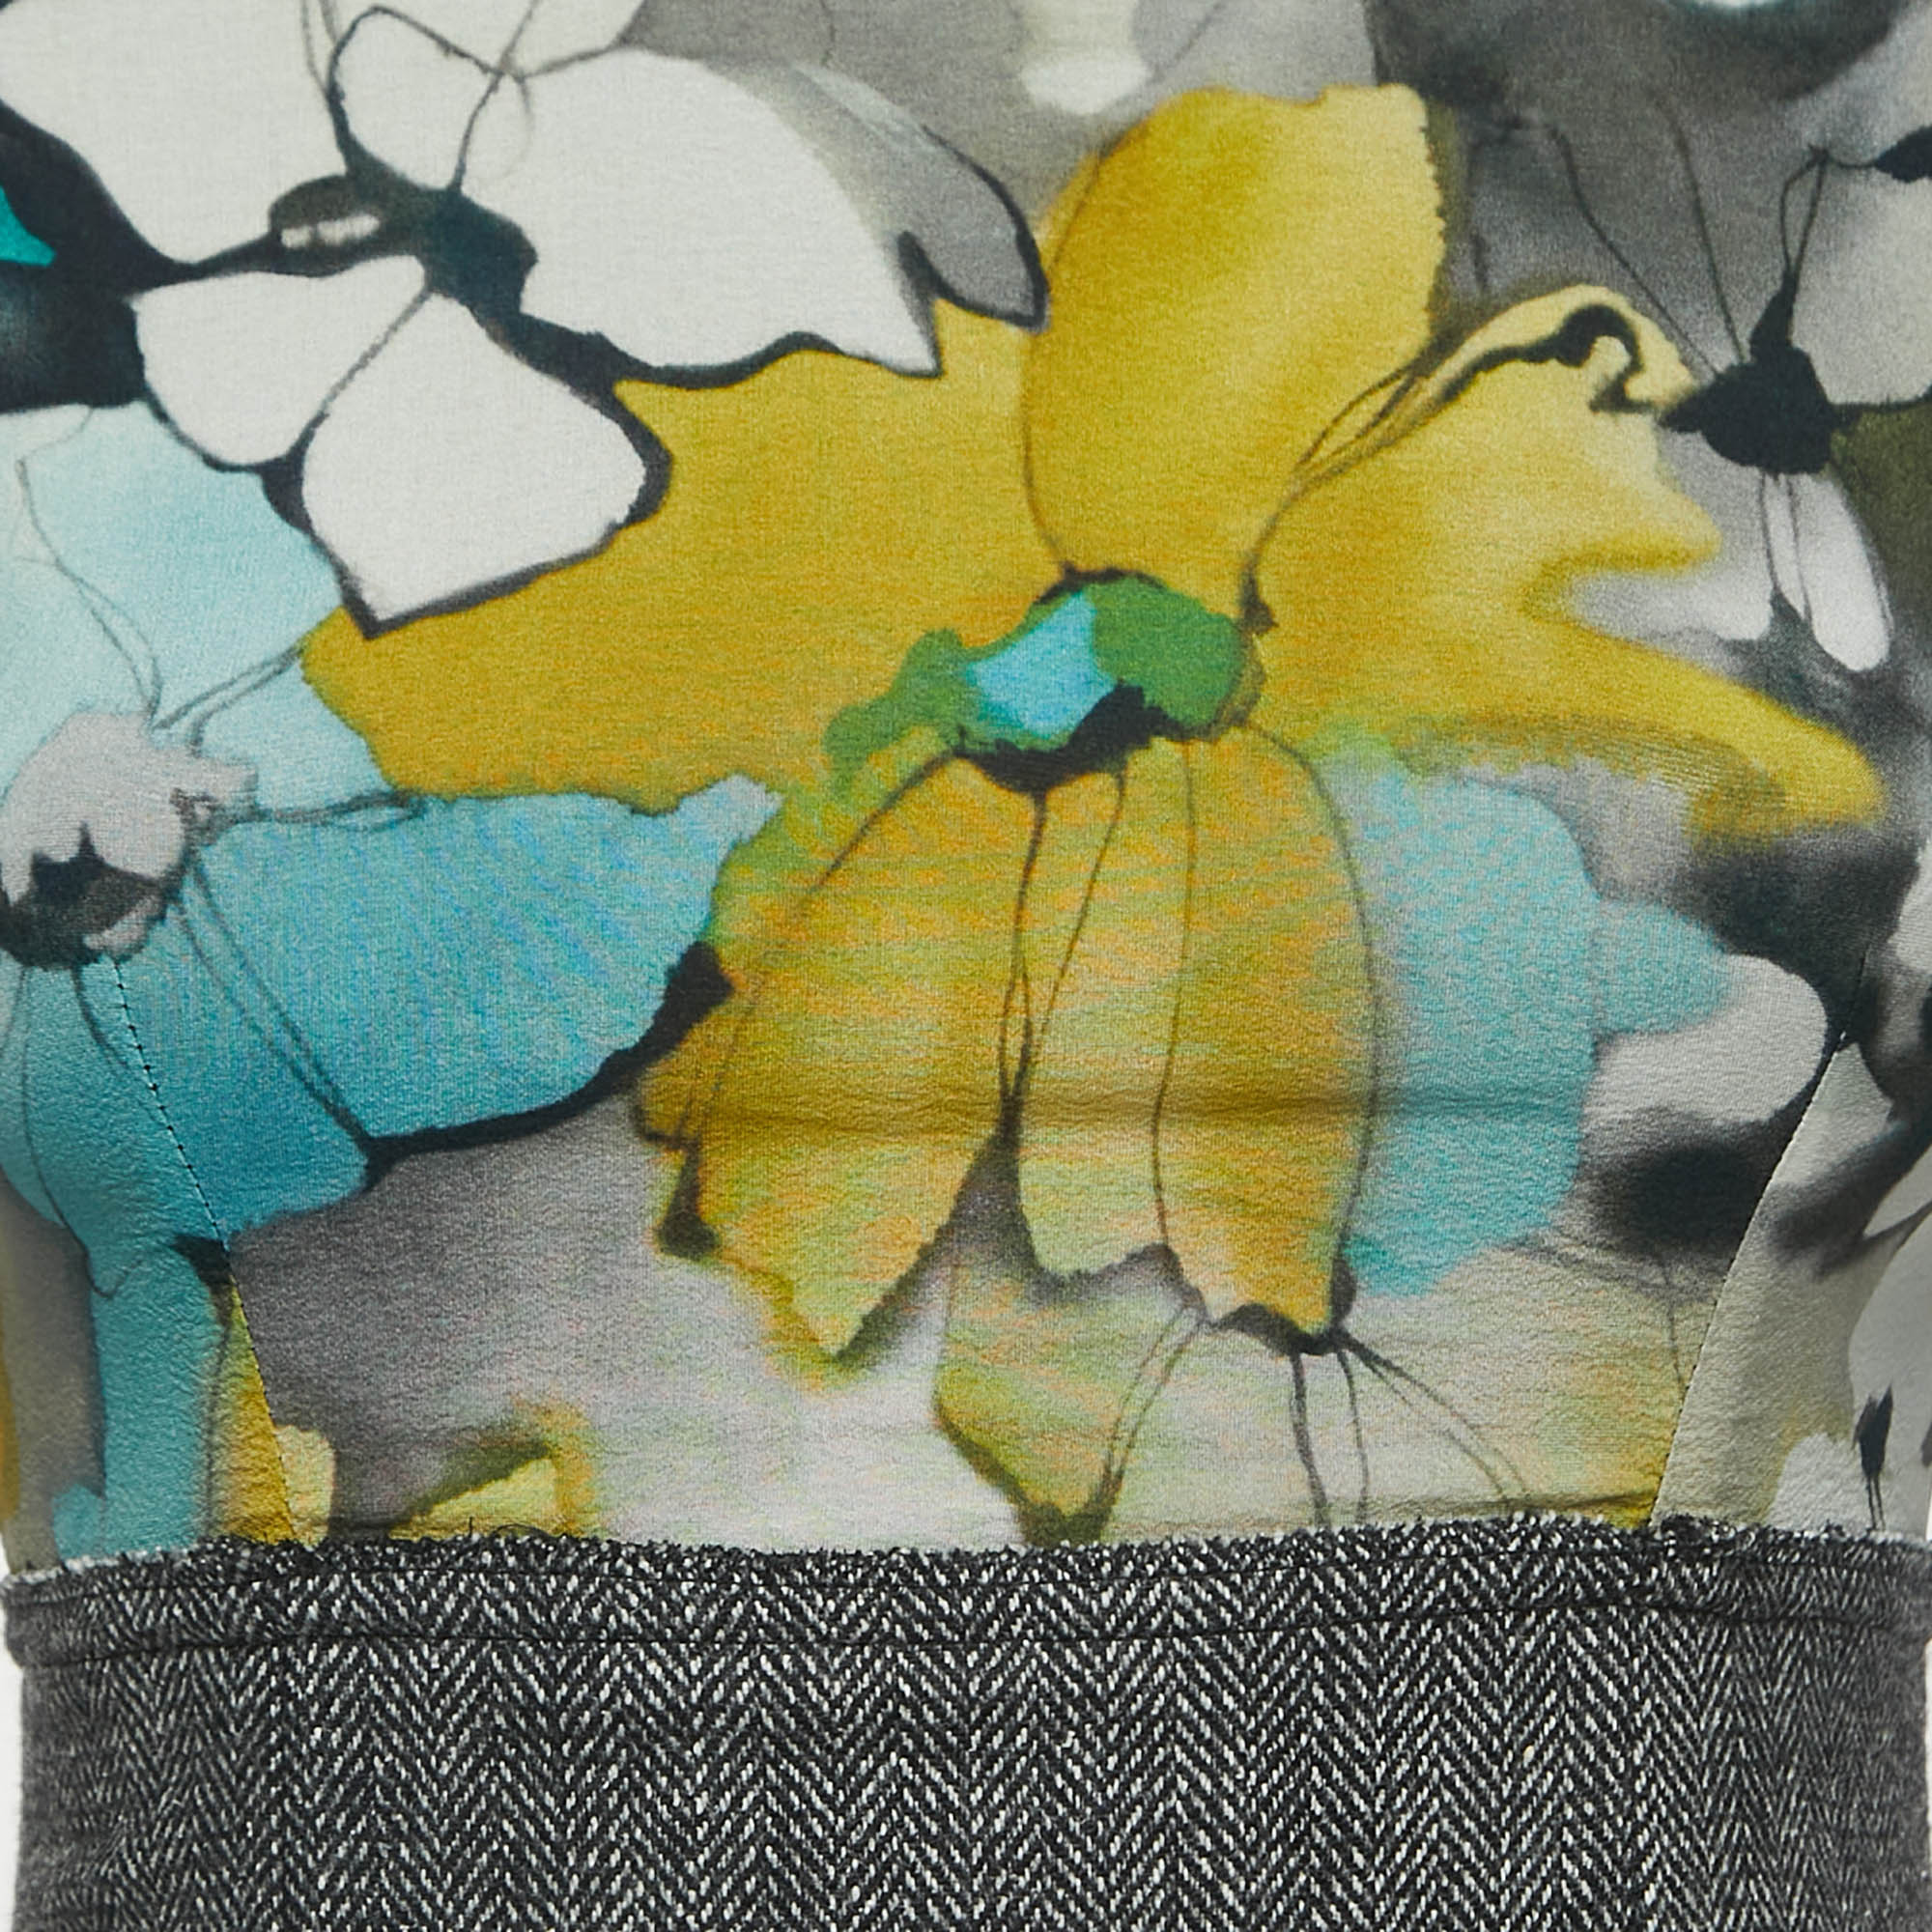 D&G Multicolor Floral Print Silk & Wool Short Dress XS